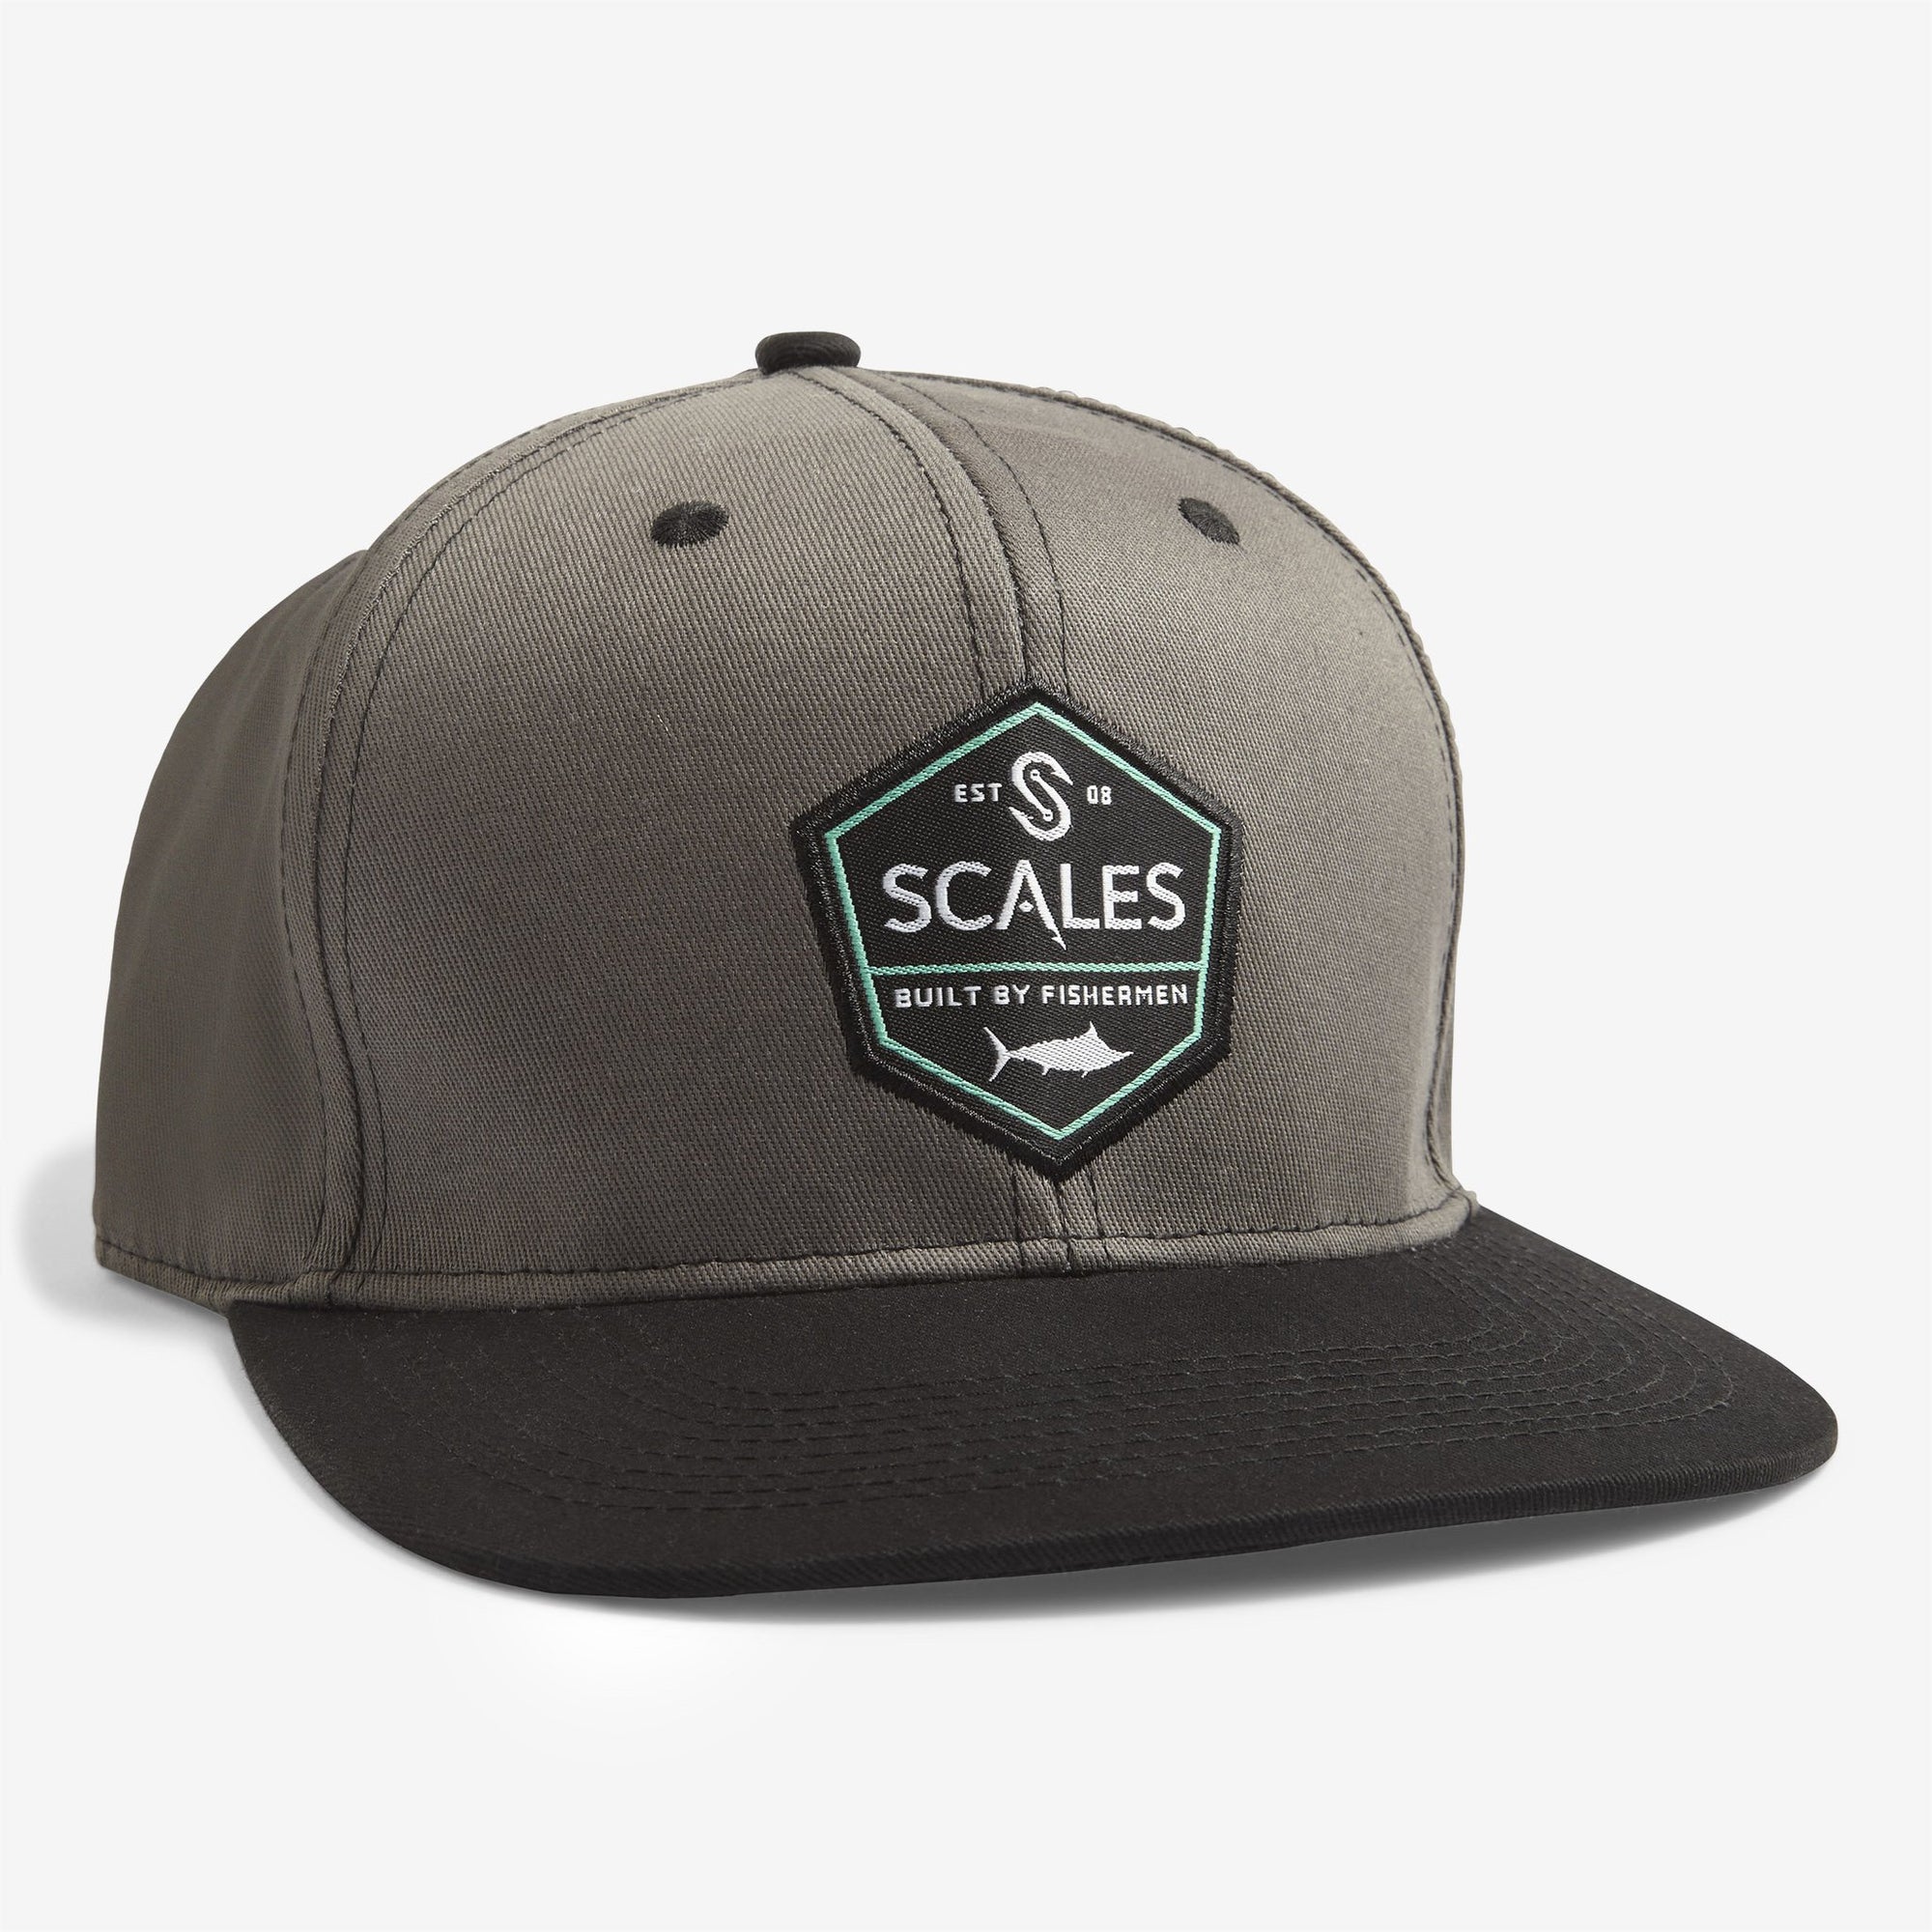 Scales Gear Built By Fisherman Snapback Grey/Black Cap